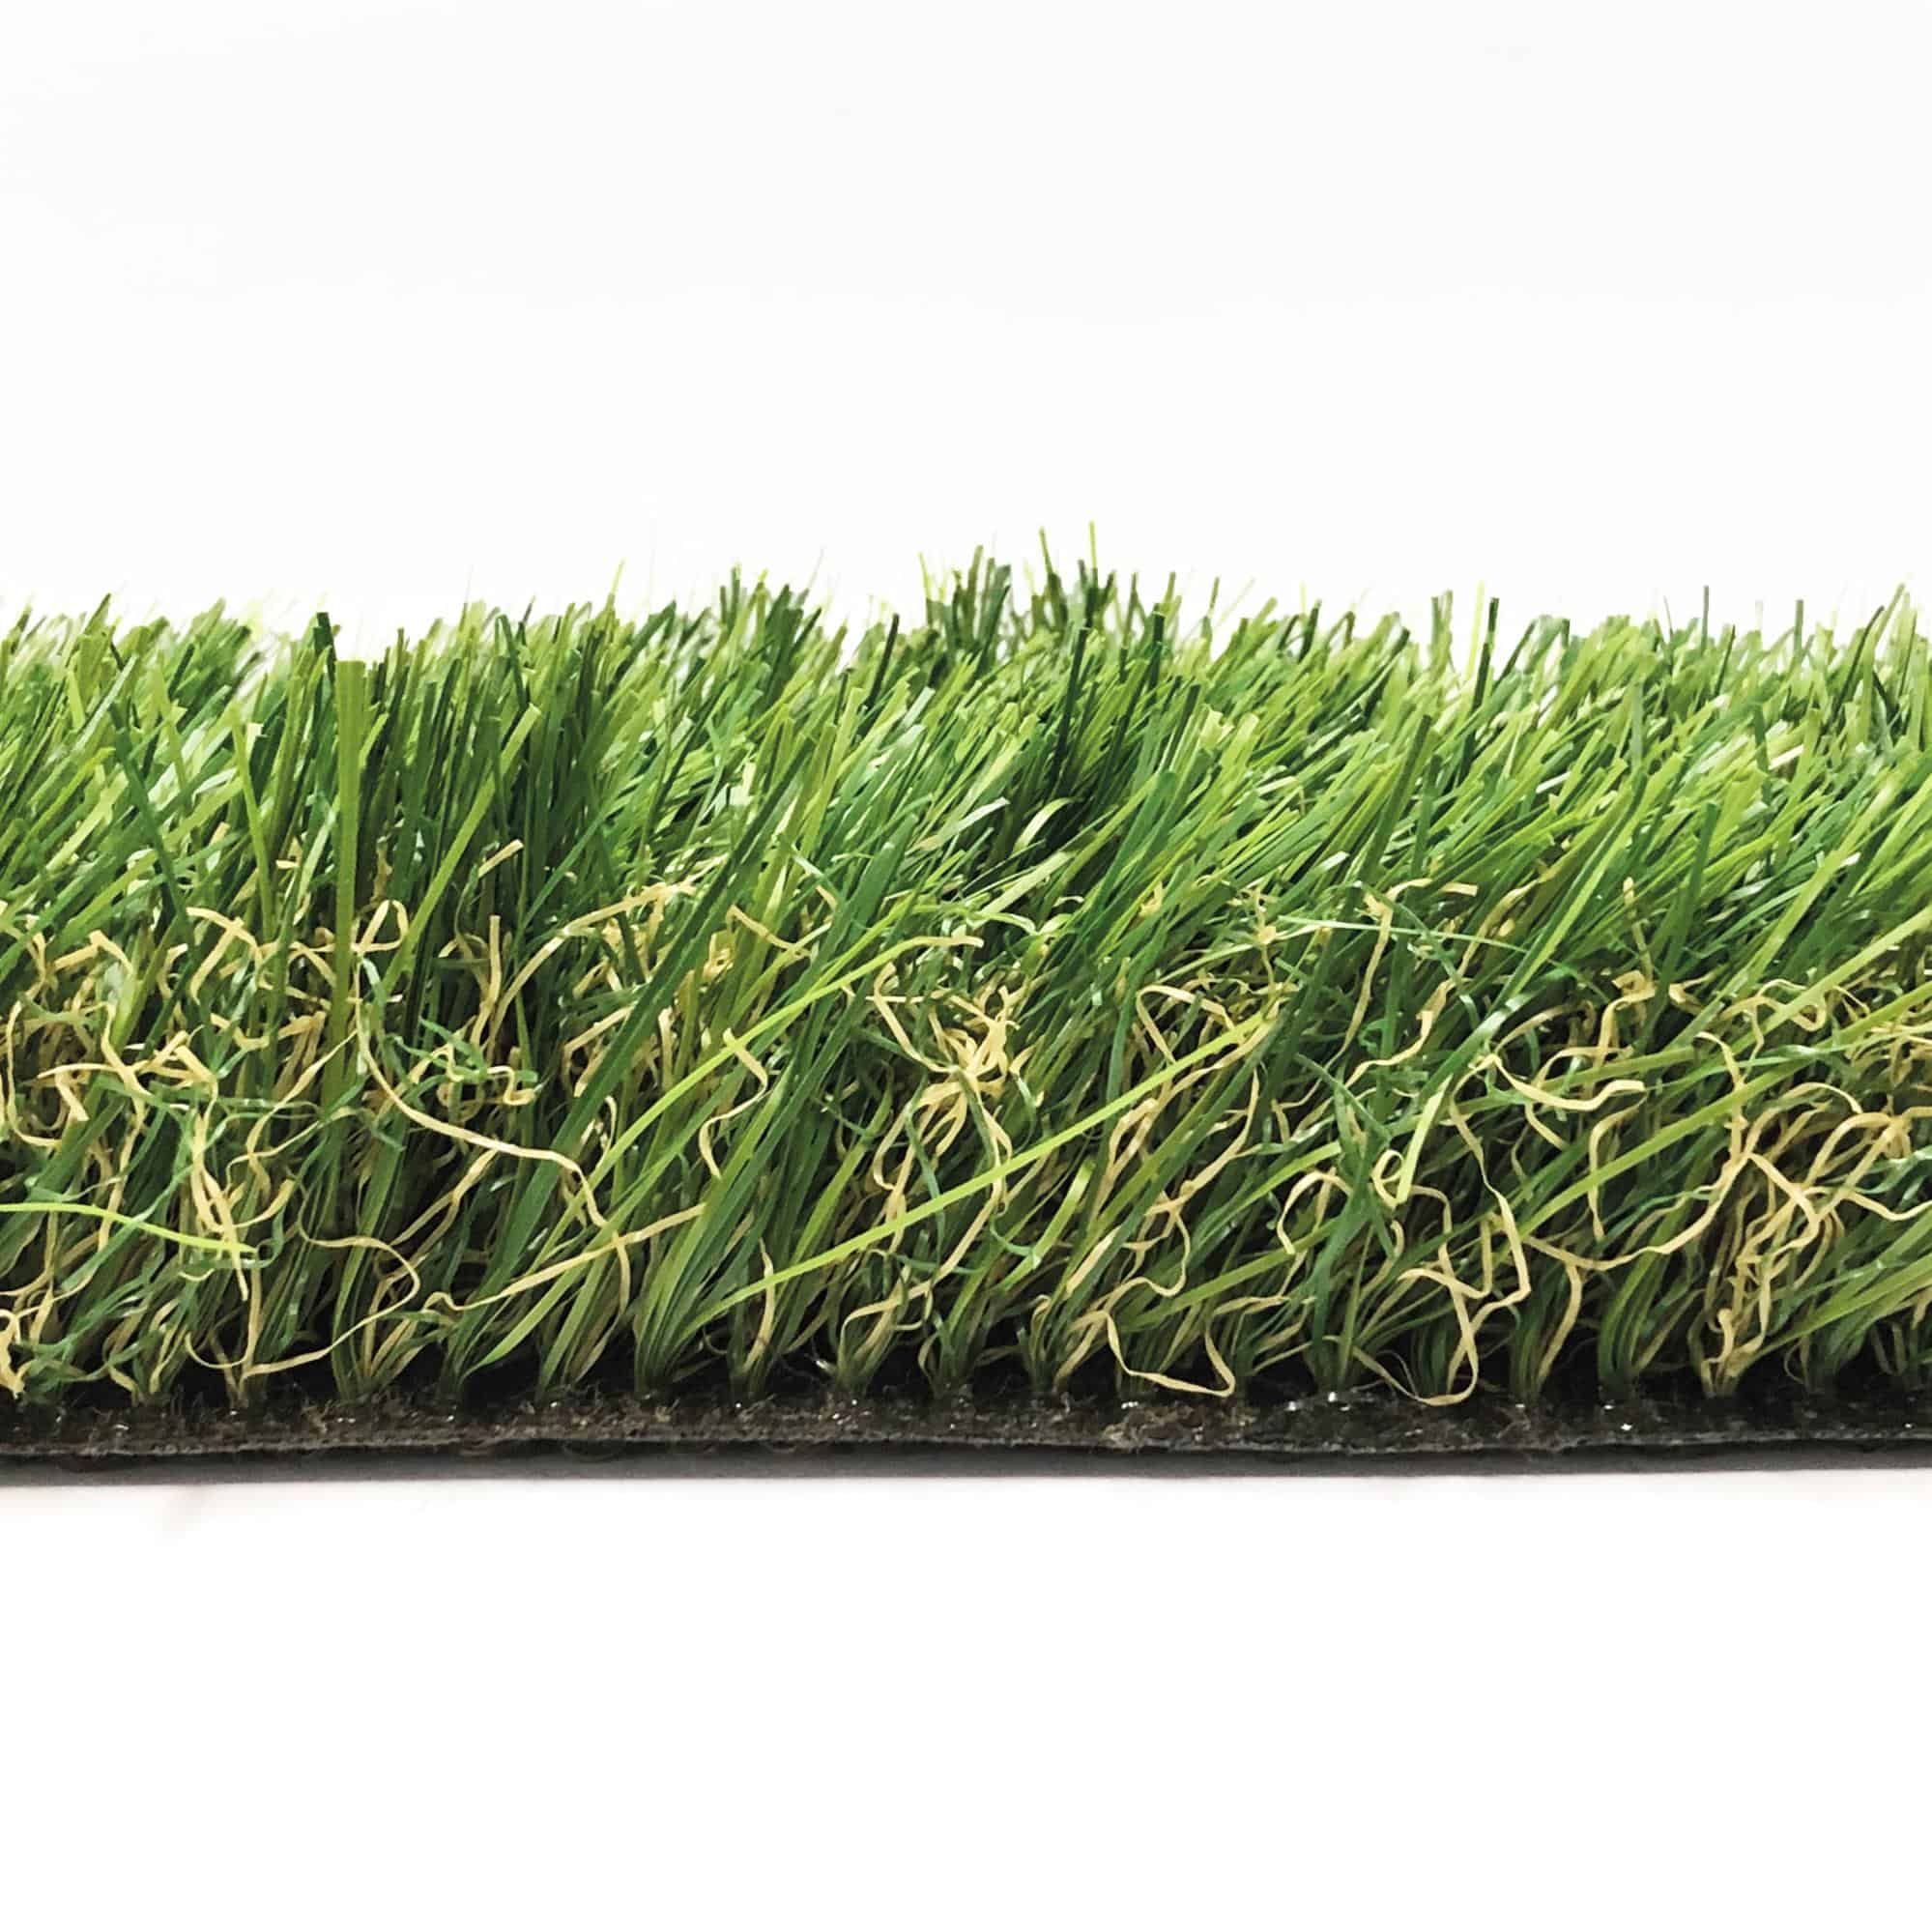 CORE Lawn Natural Artificial Grass 4m Wide Roll 19 m